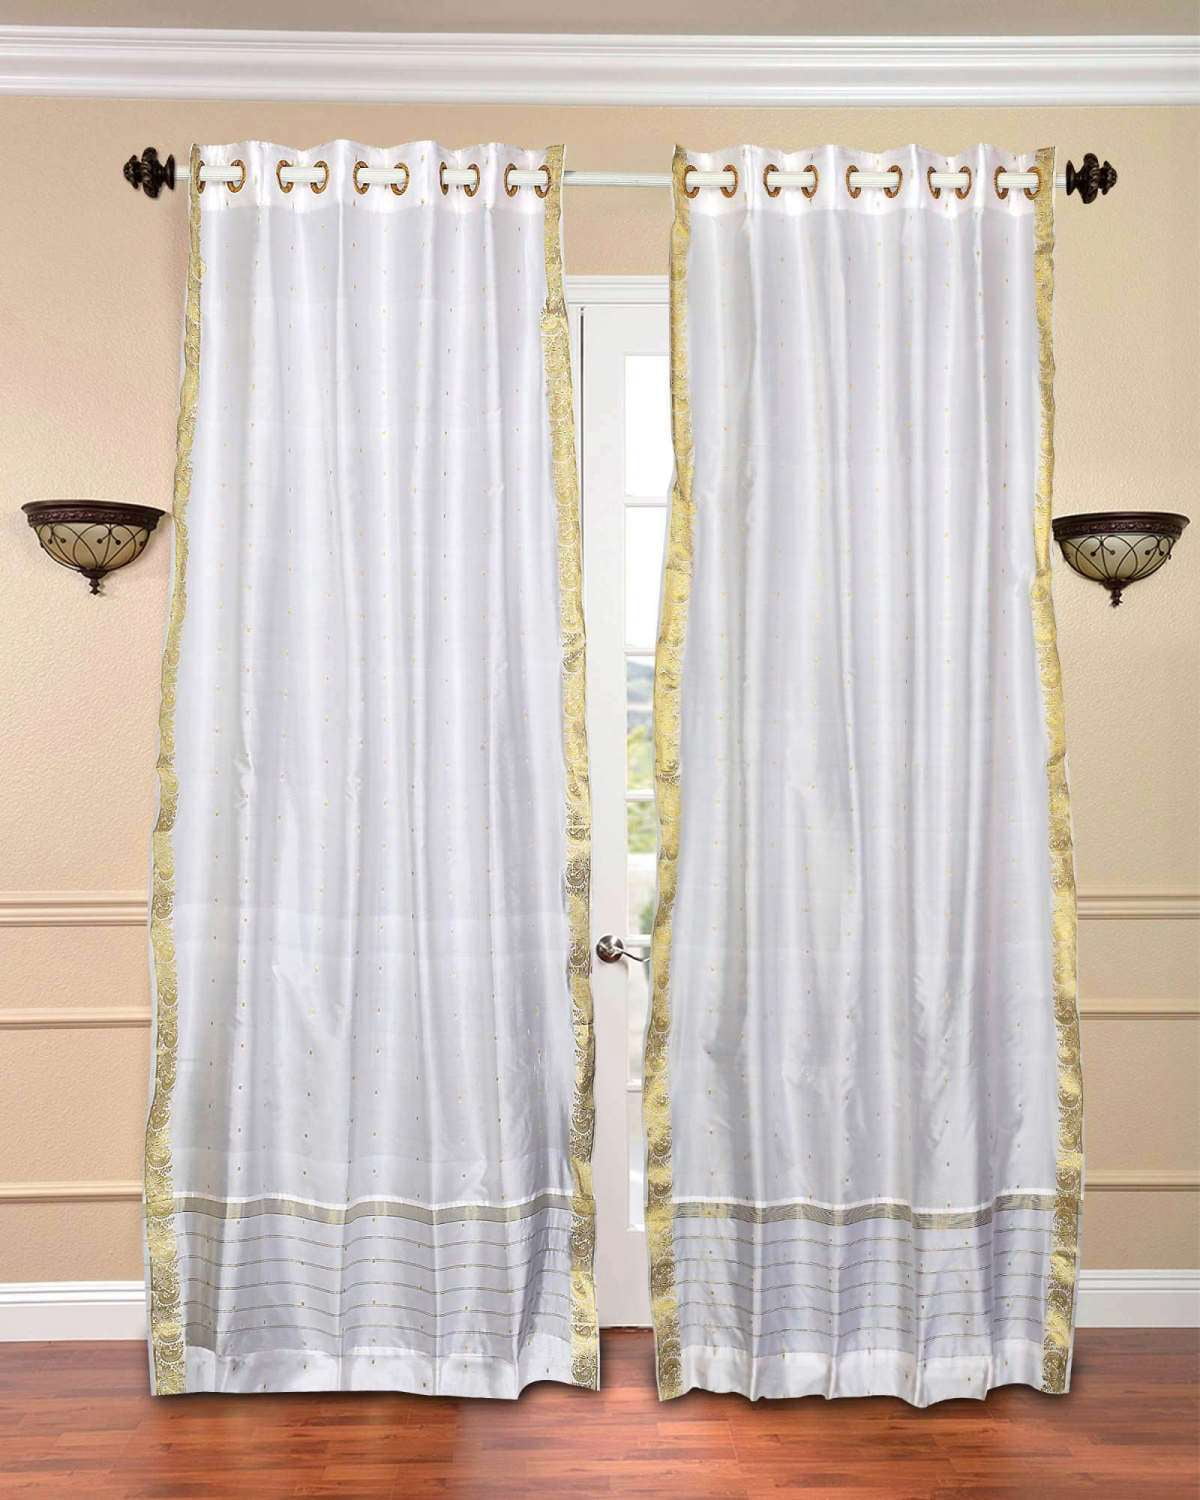 Lined-White Golden Trim Ring Top Sheer Sari Cafe Curtain Drape-43Wx24L ...